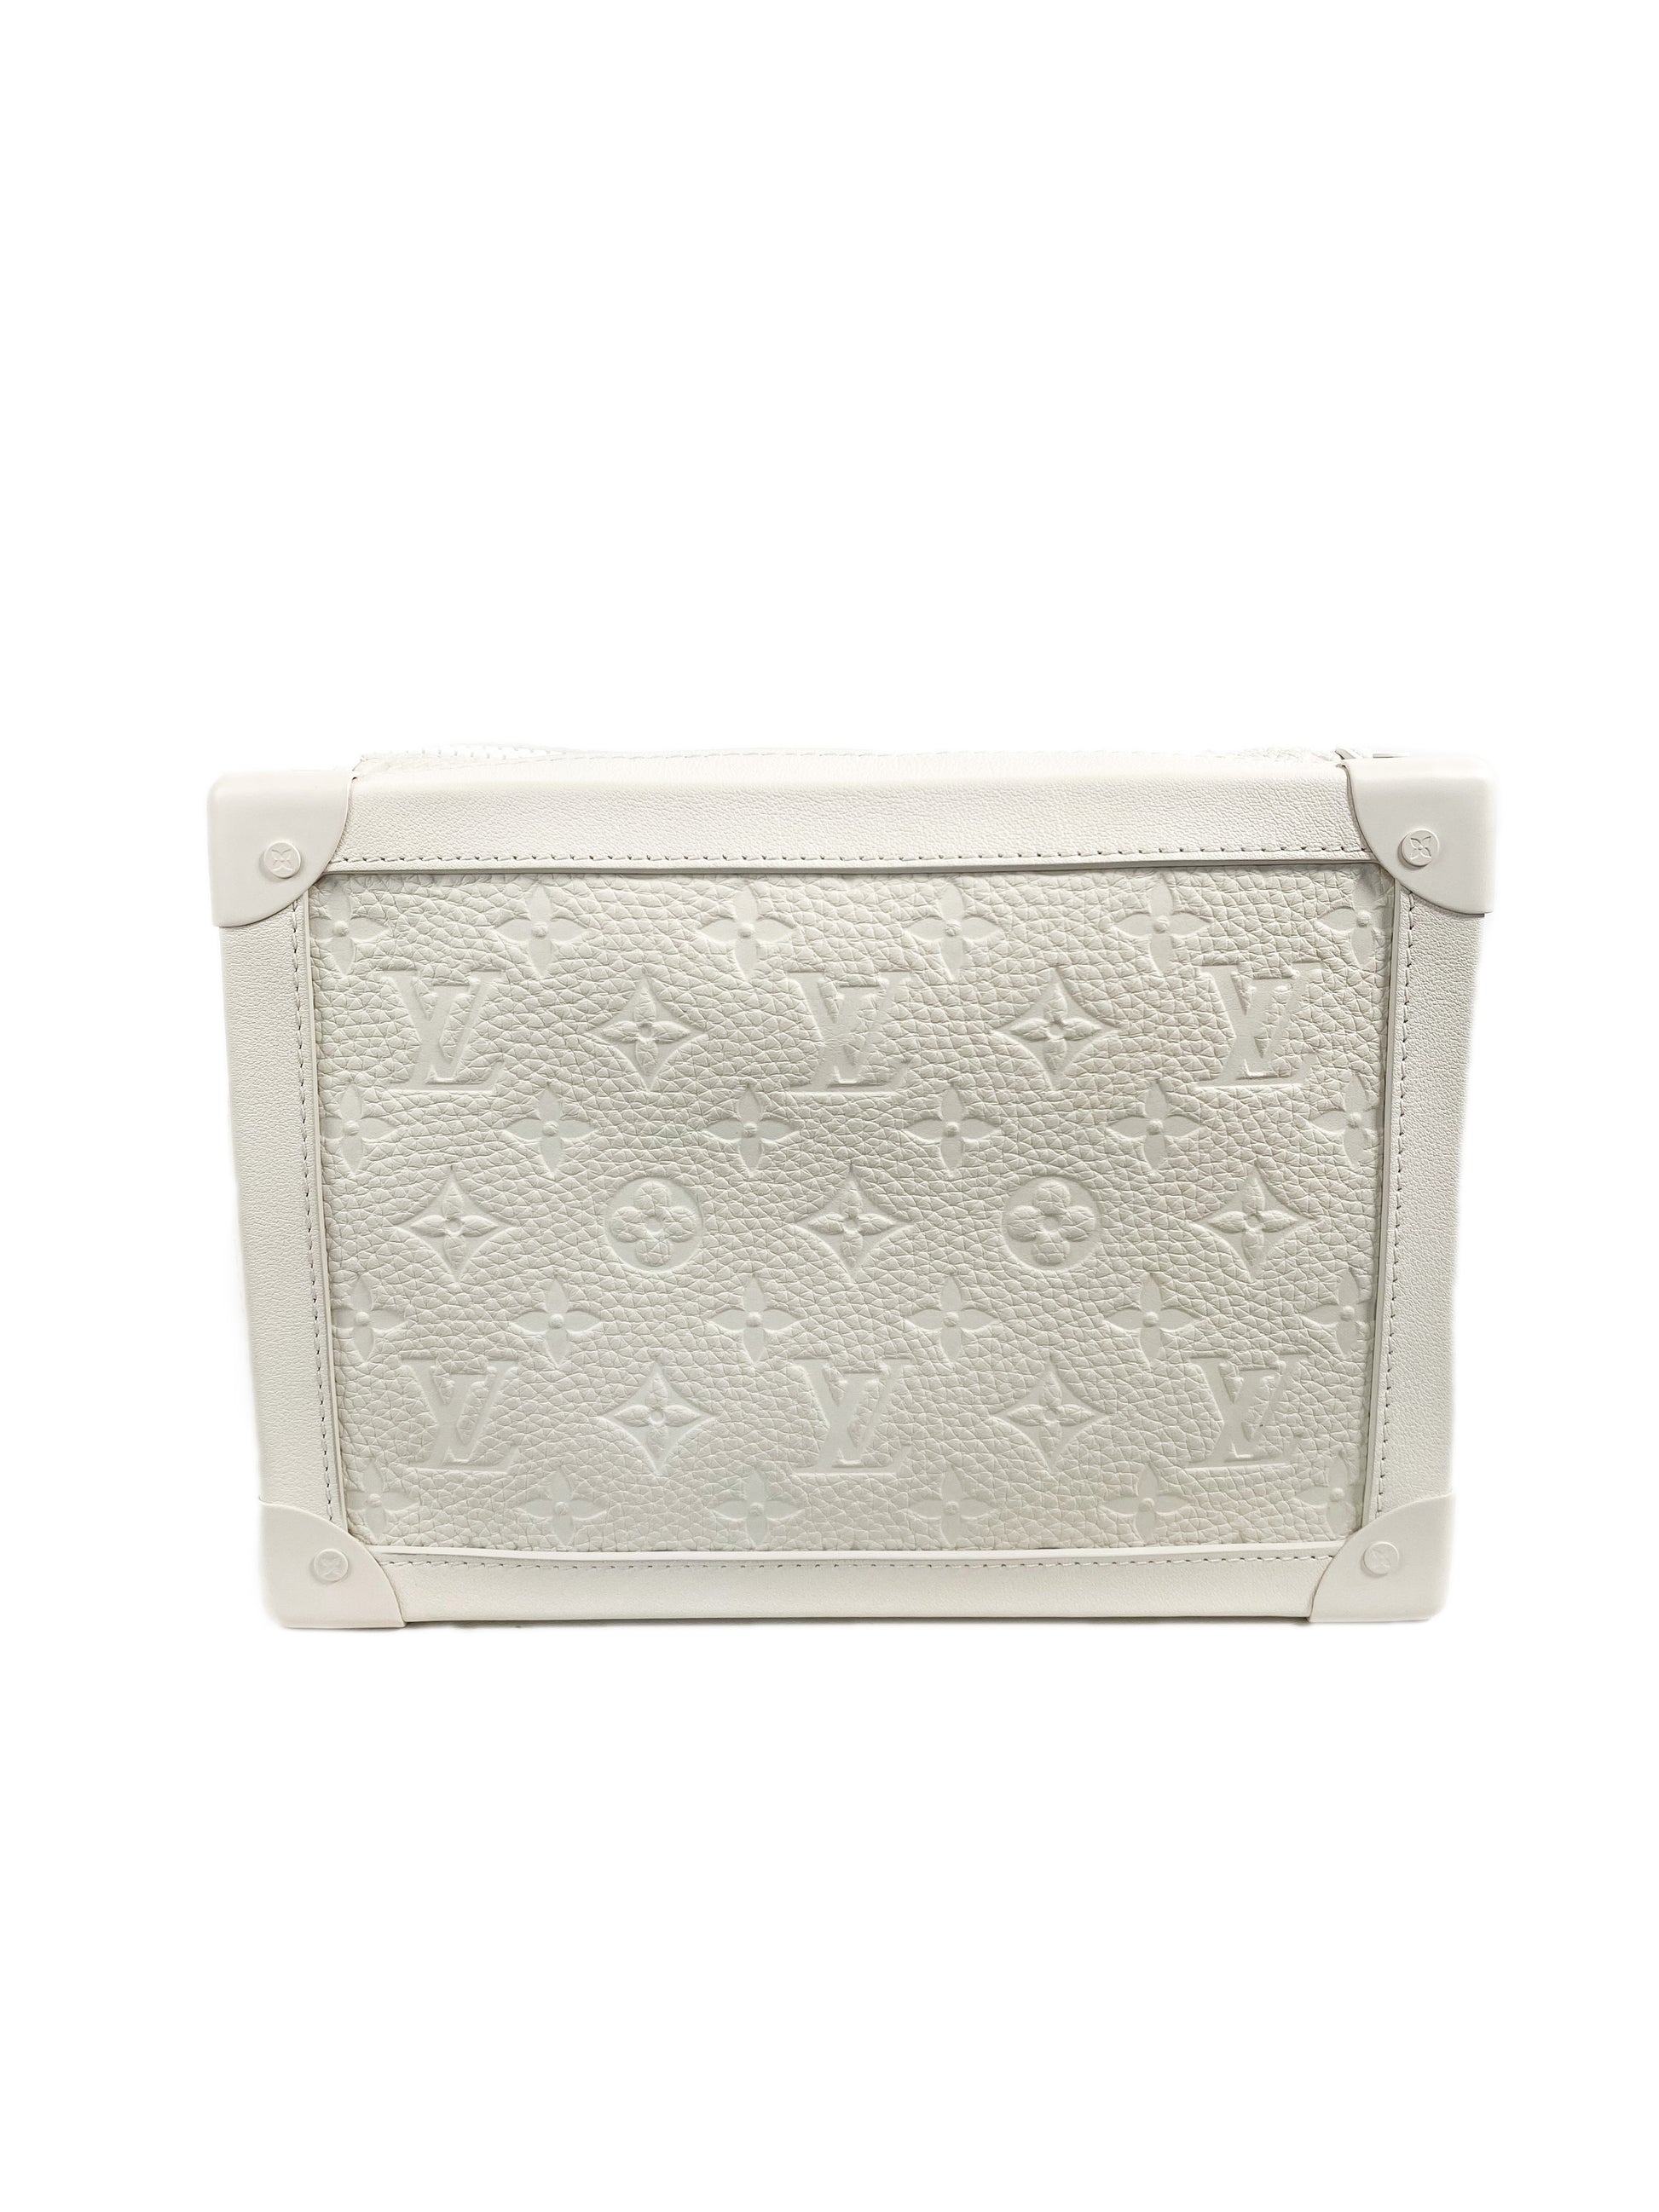 Louis Vuitton Soft Trunk Monogram Powder White in Taurillon